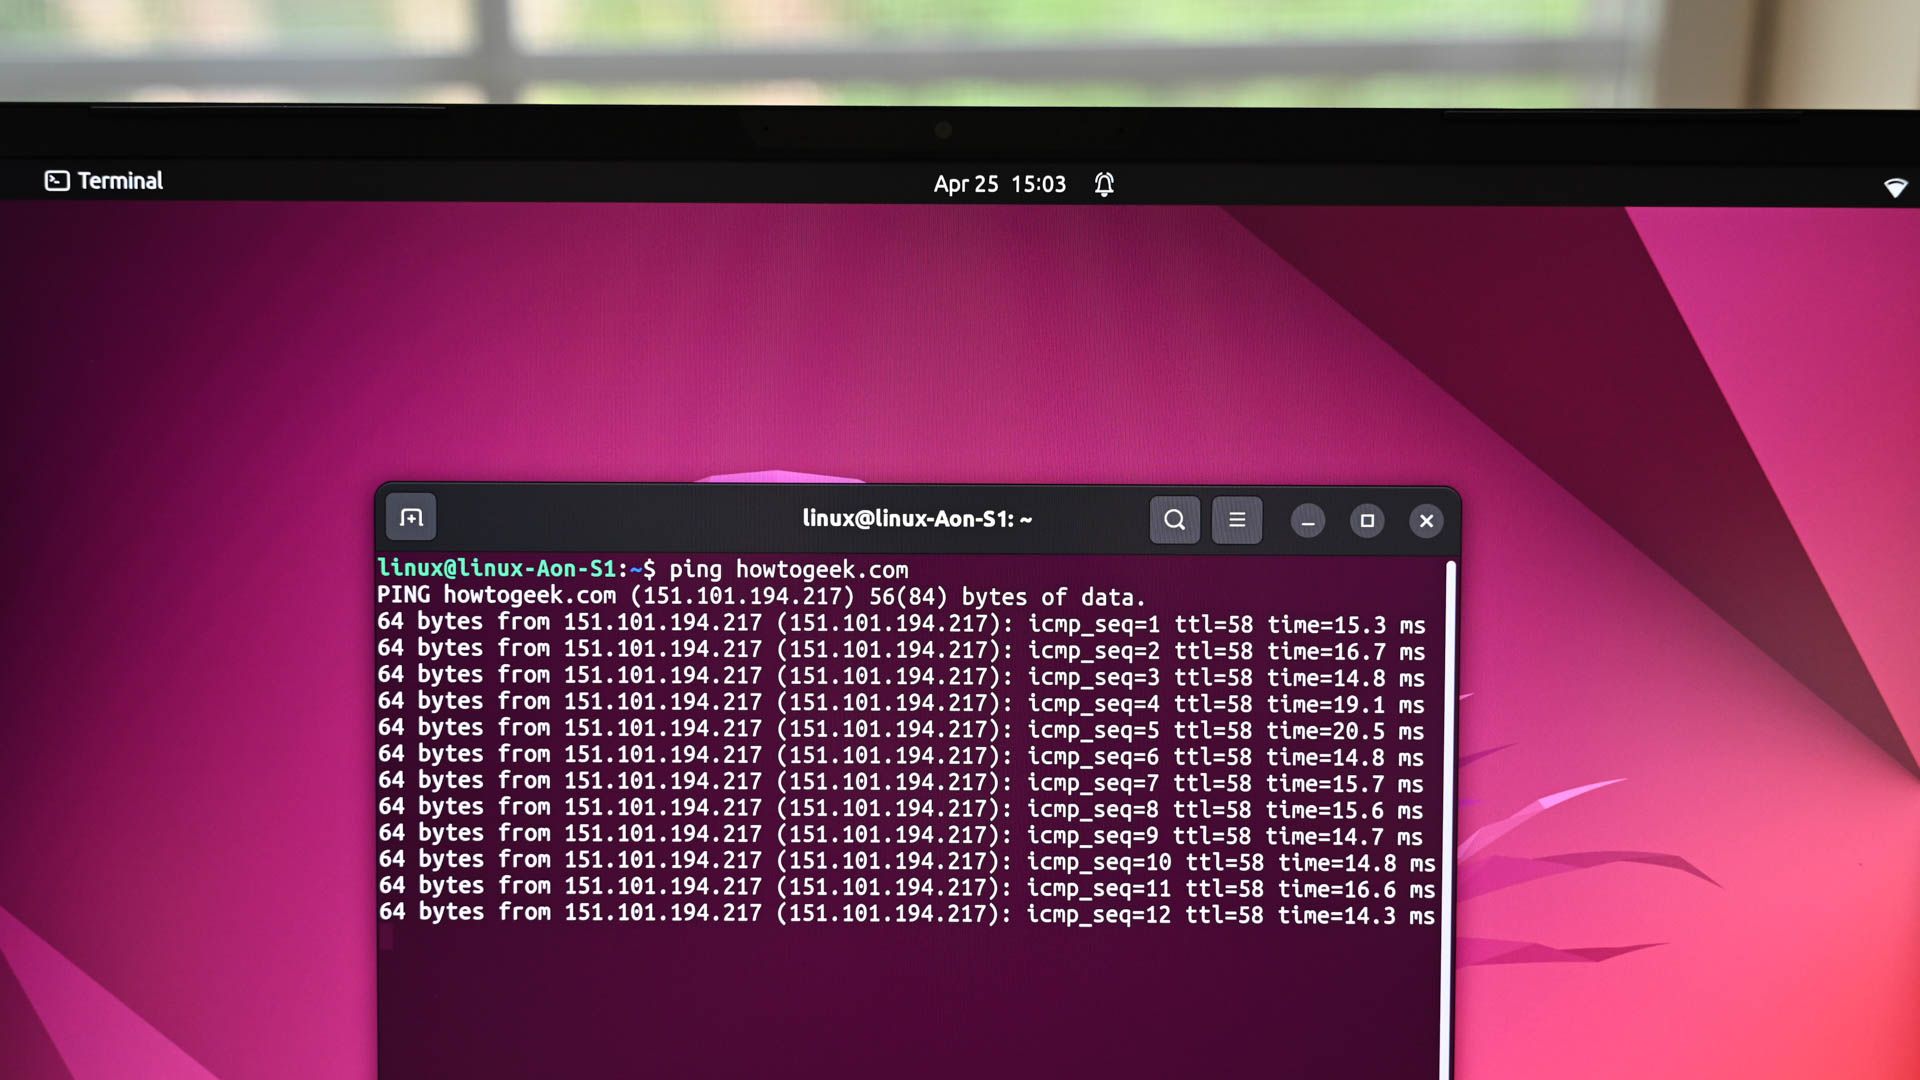 The ping command on Ubuntu. 